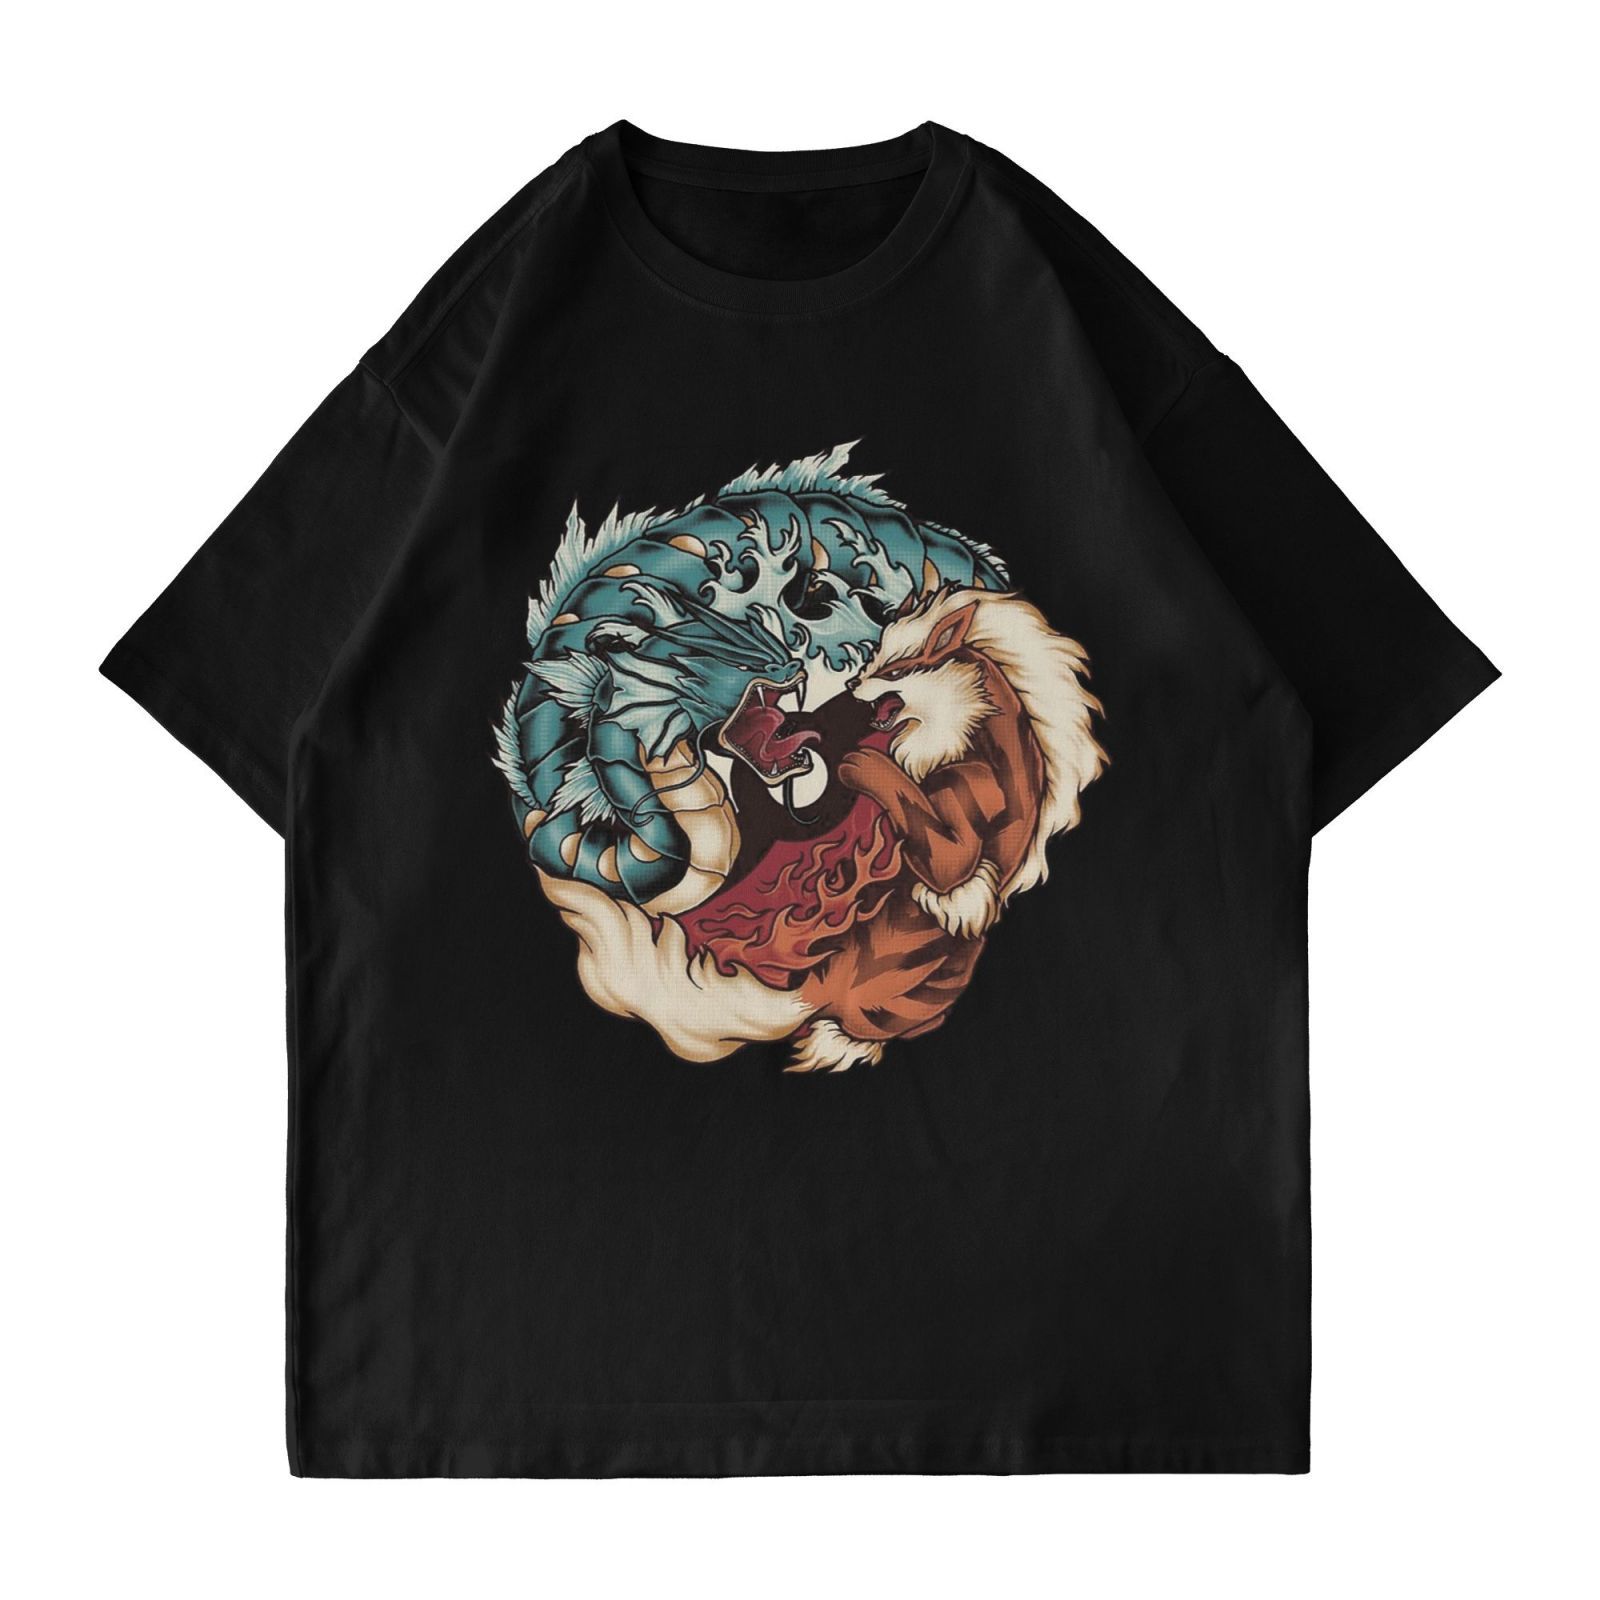 Hubgo - Men water and fire t shirts 300g thick cotton tops tees fashion black tshirt